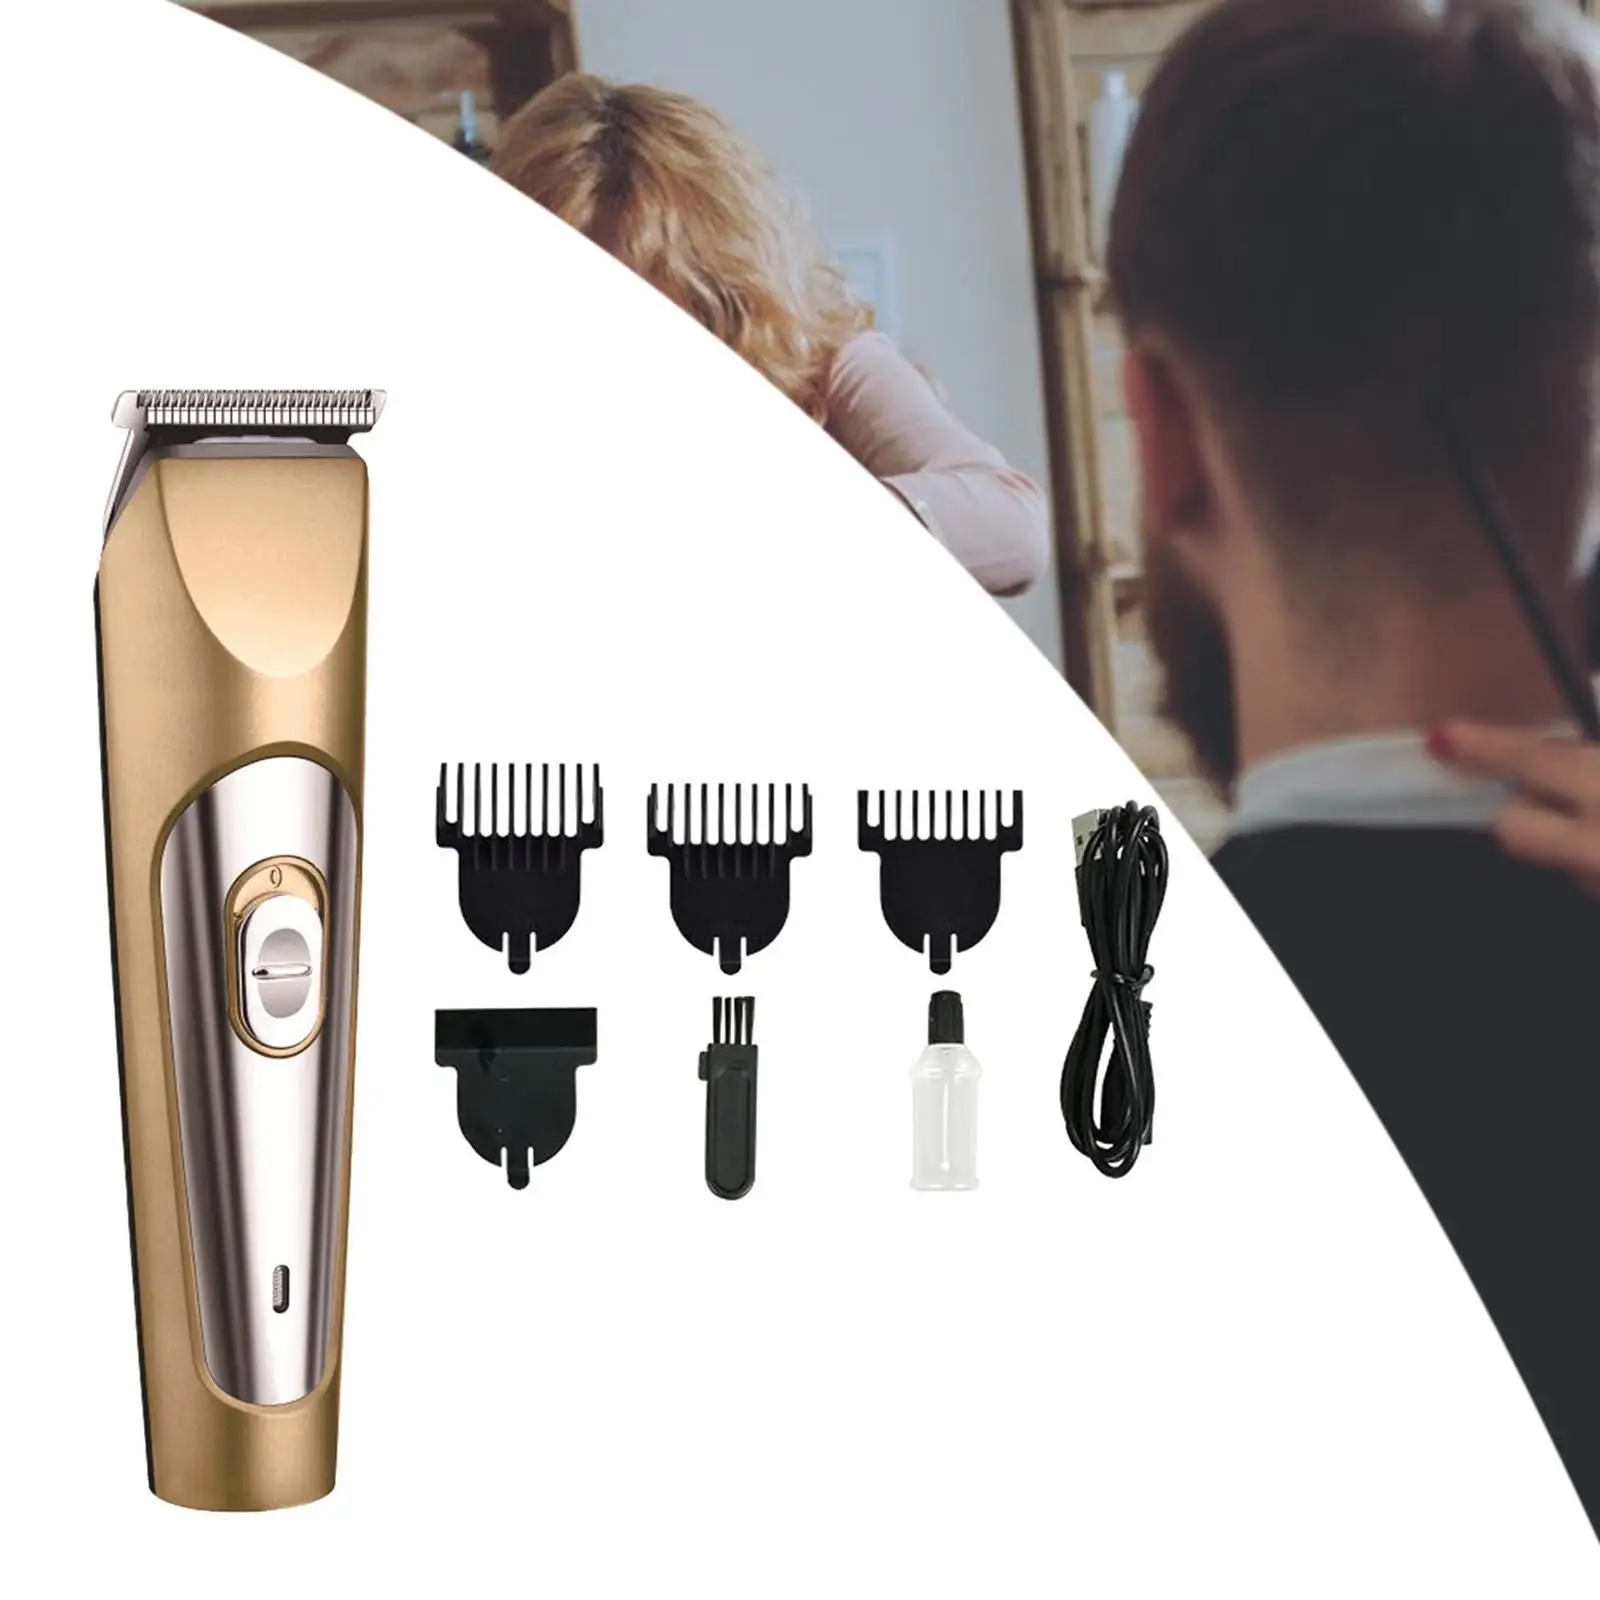 Professional Hair Clipper Metal Head Shaver for Men Hair Cutting Hairdresser